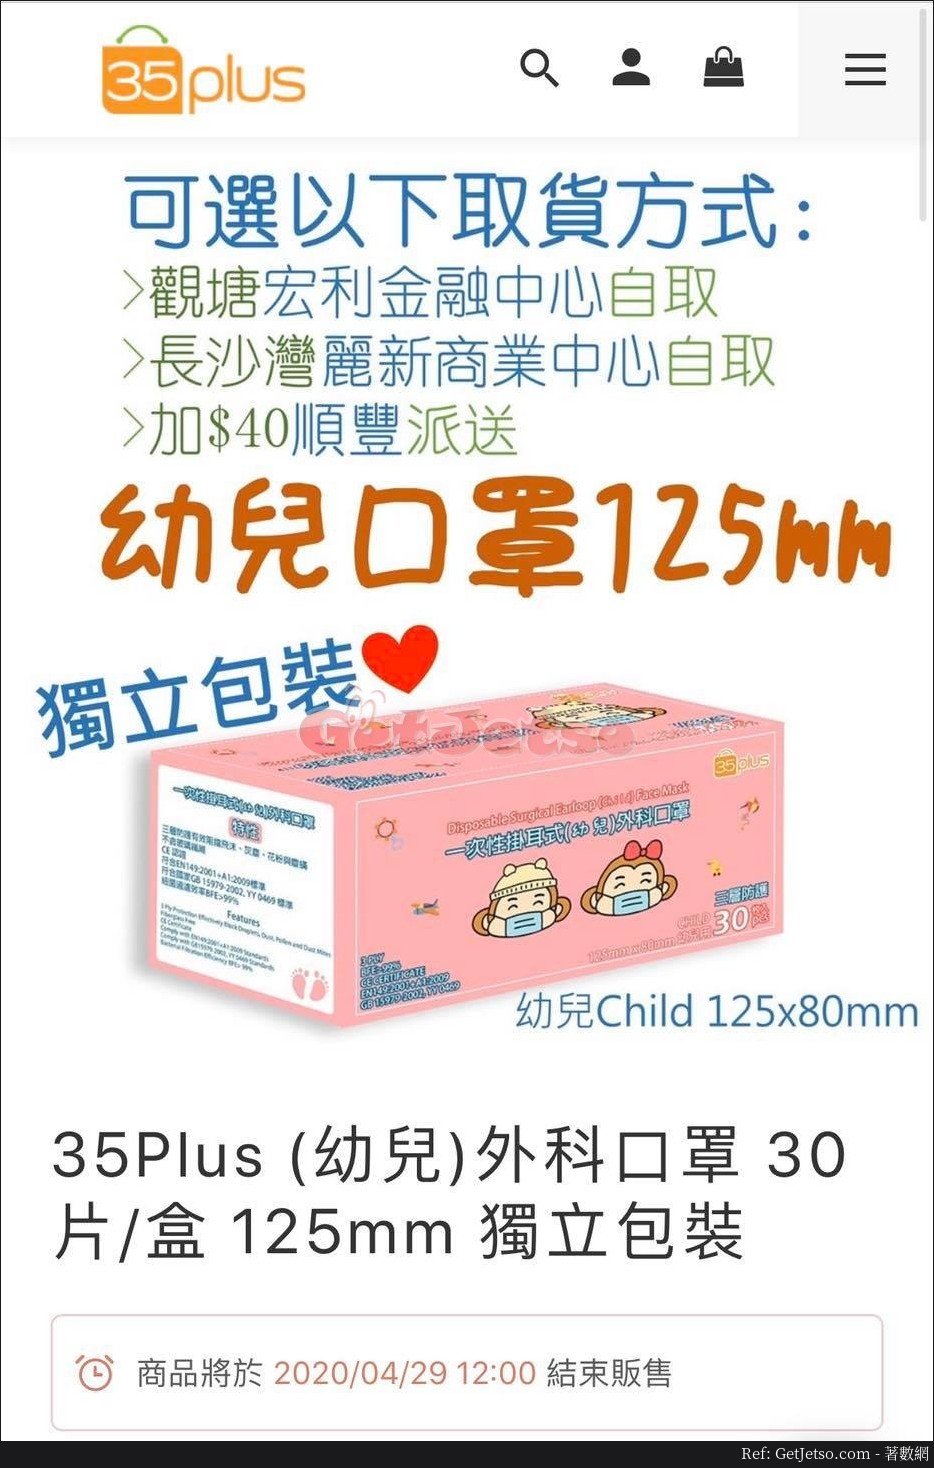 35Plus 即日網上發售幼兒口罩套裝0盒30個圖片1